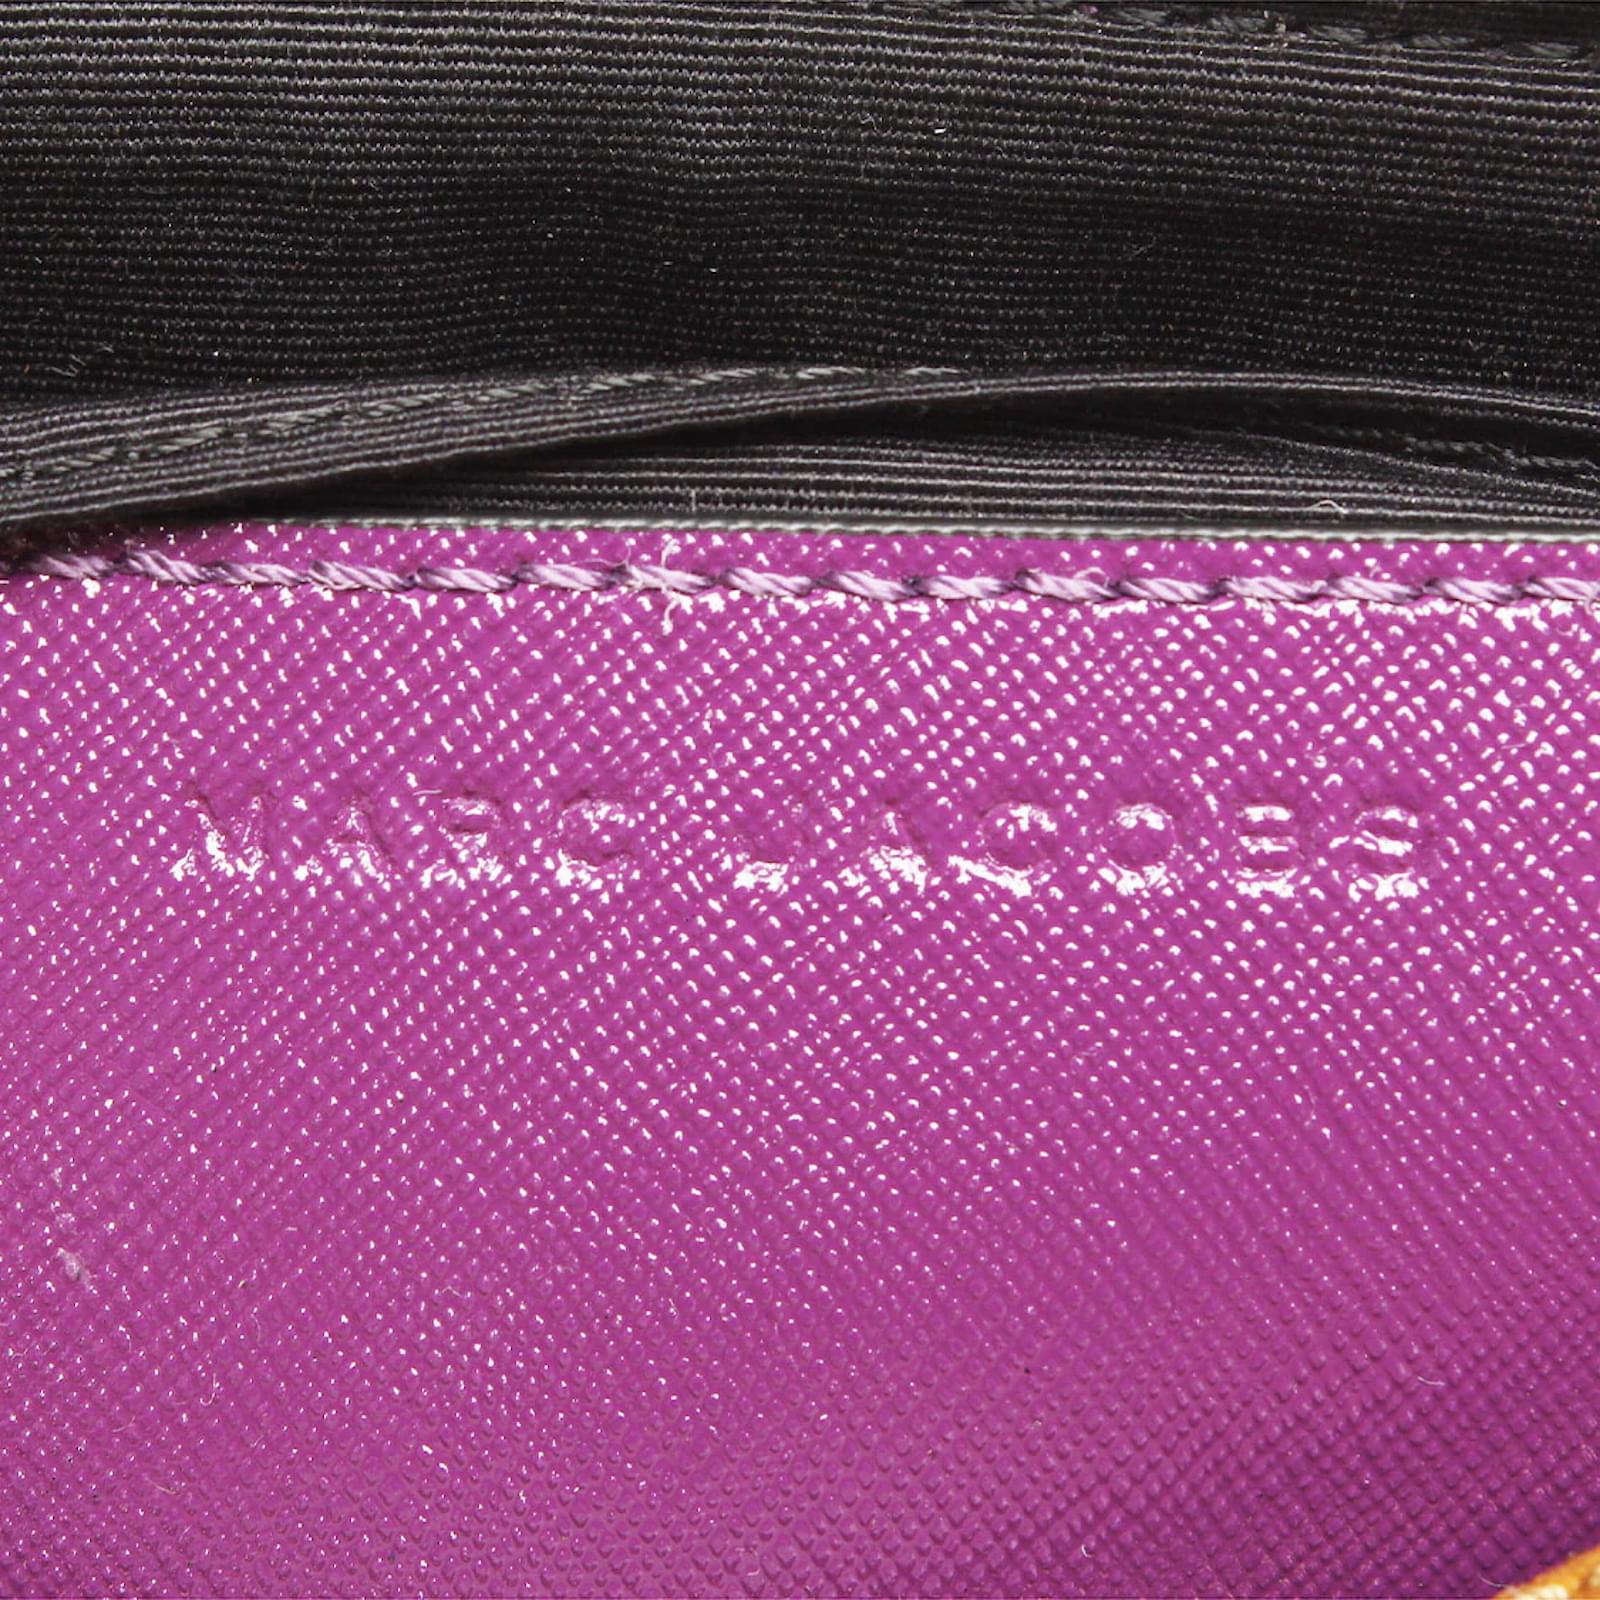 Marc Jacobs Snapshot camera bag Beige Leather Pony-style calfskin  ref.882528 - Joli Closet